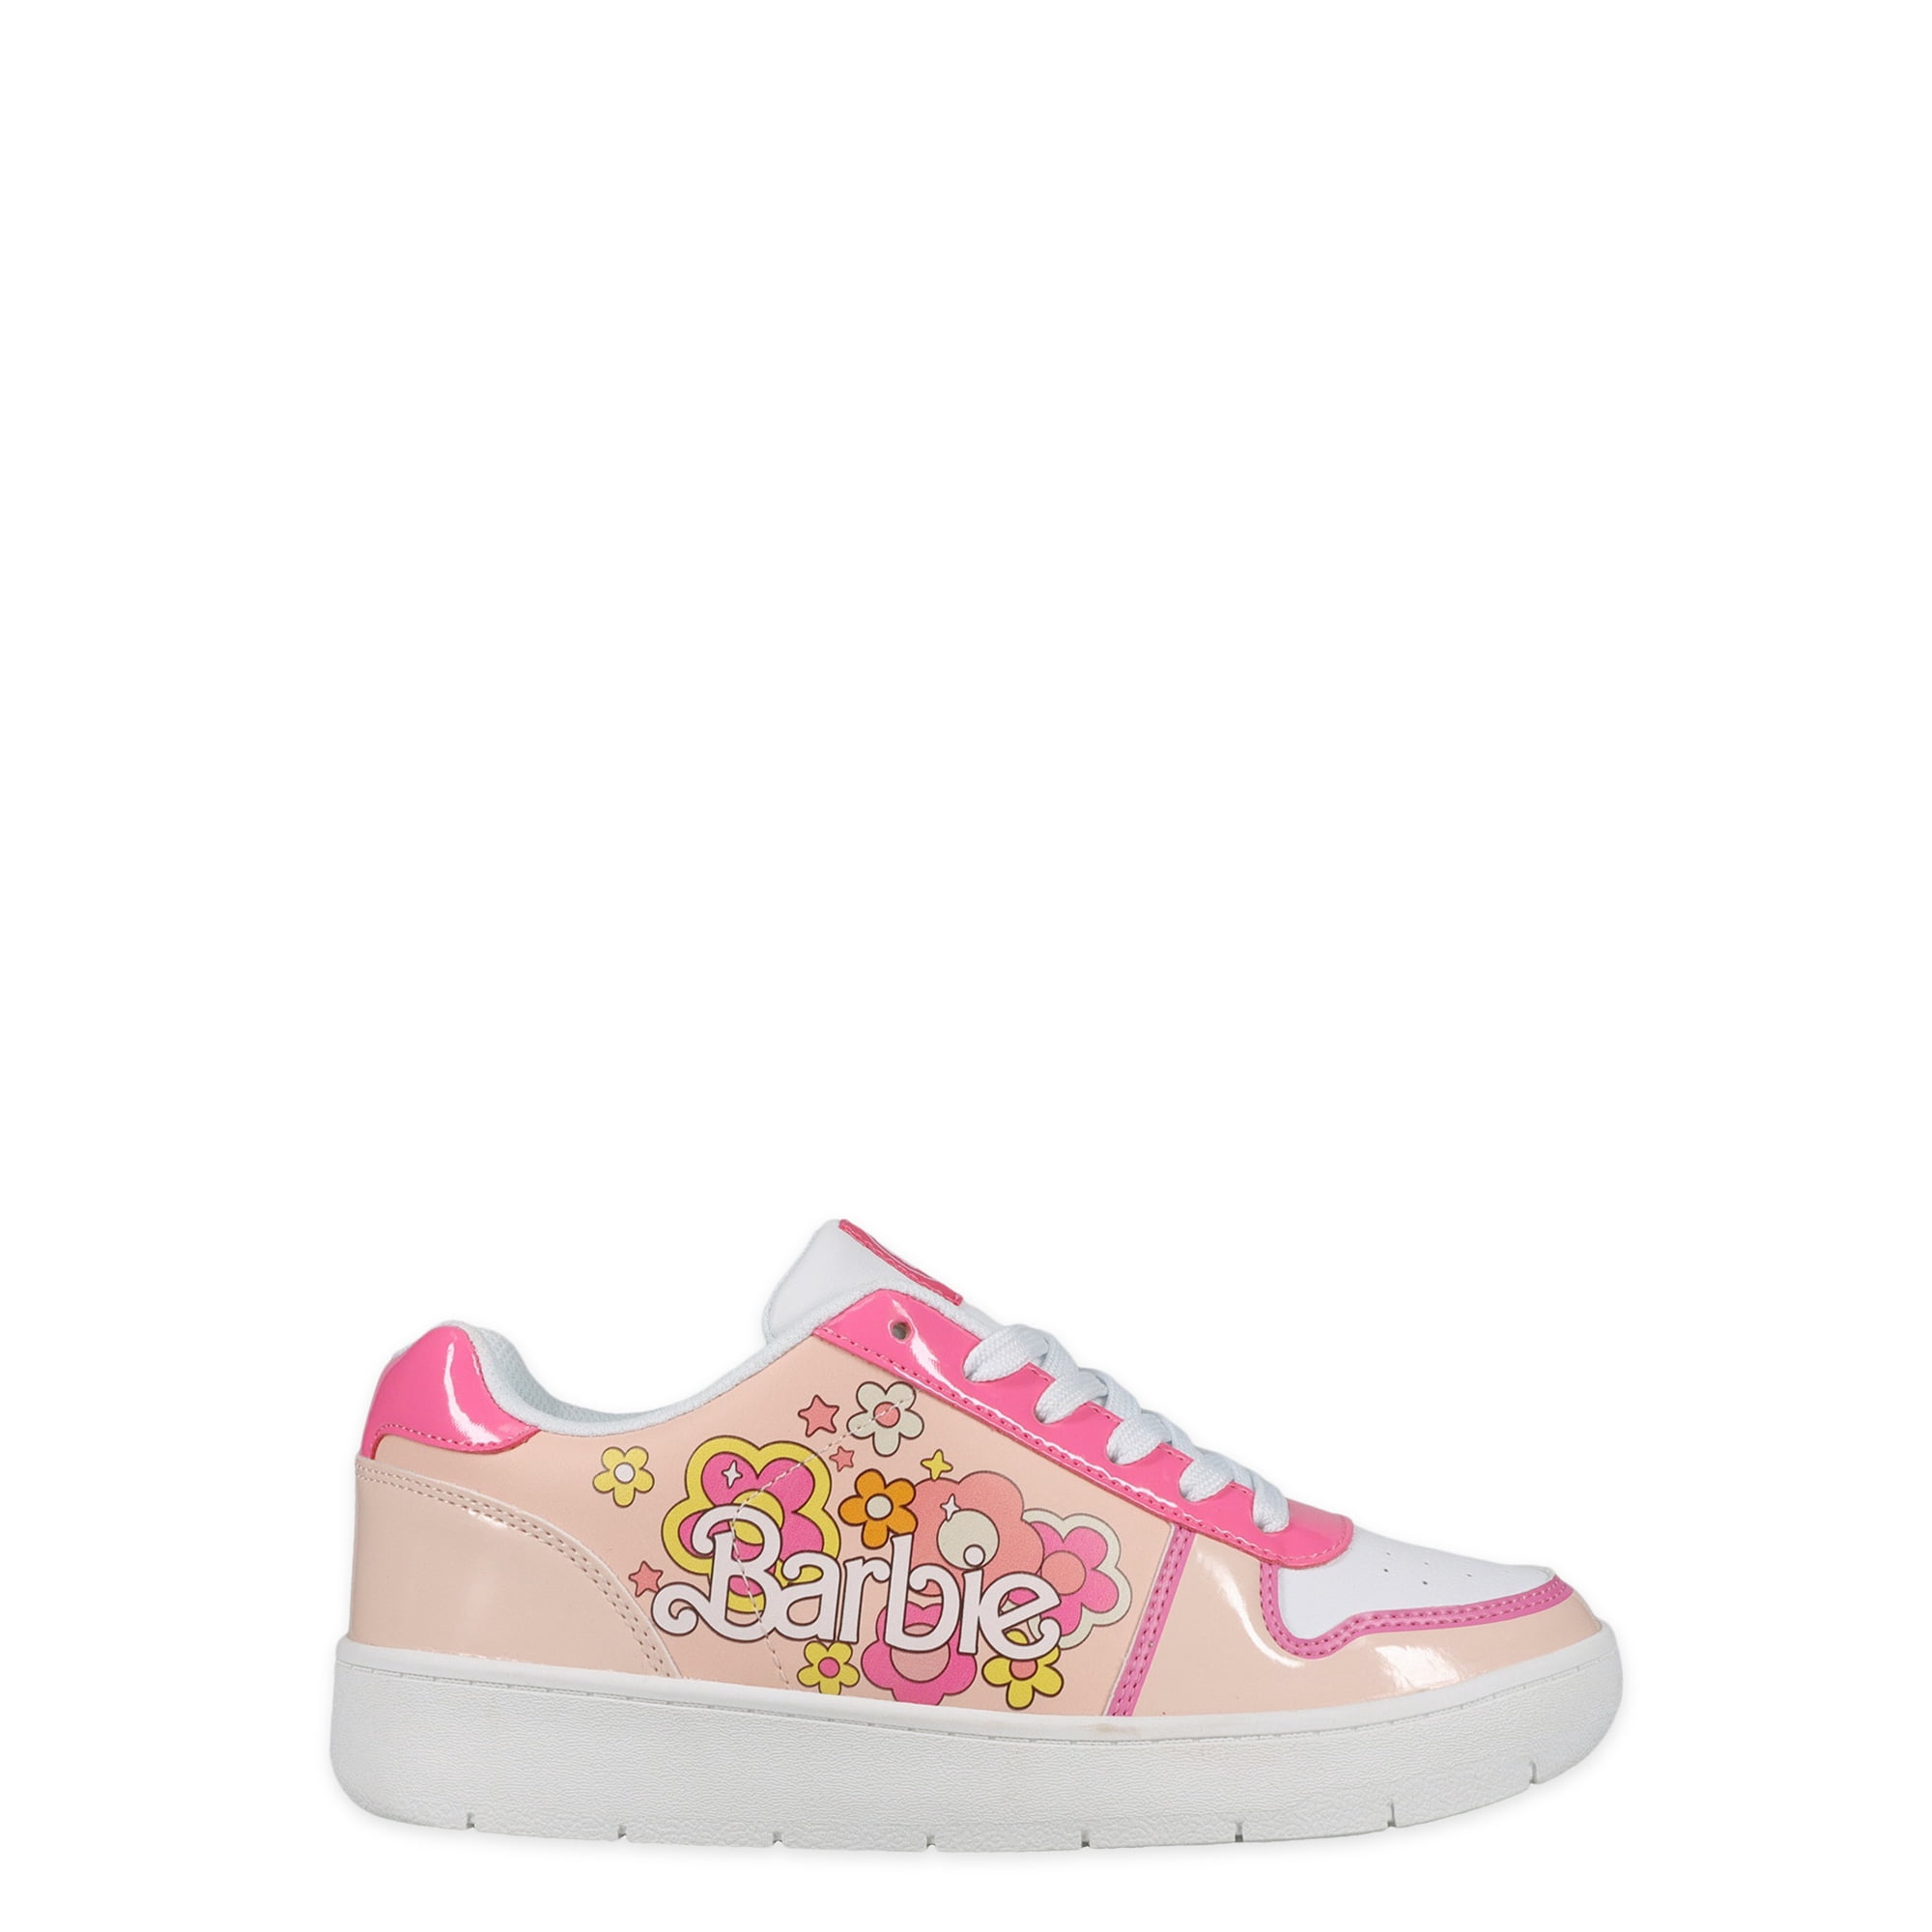 Women's Barbie by Mattel Pink Casual Court Sneaker or Disney Stitch Low Top Slip-on Sneaker (Sizes: 6-11) $15 + Free Shipping w/ Walmart+ or on $35+